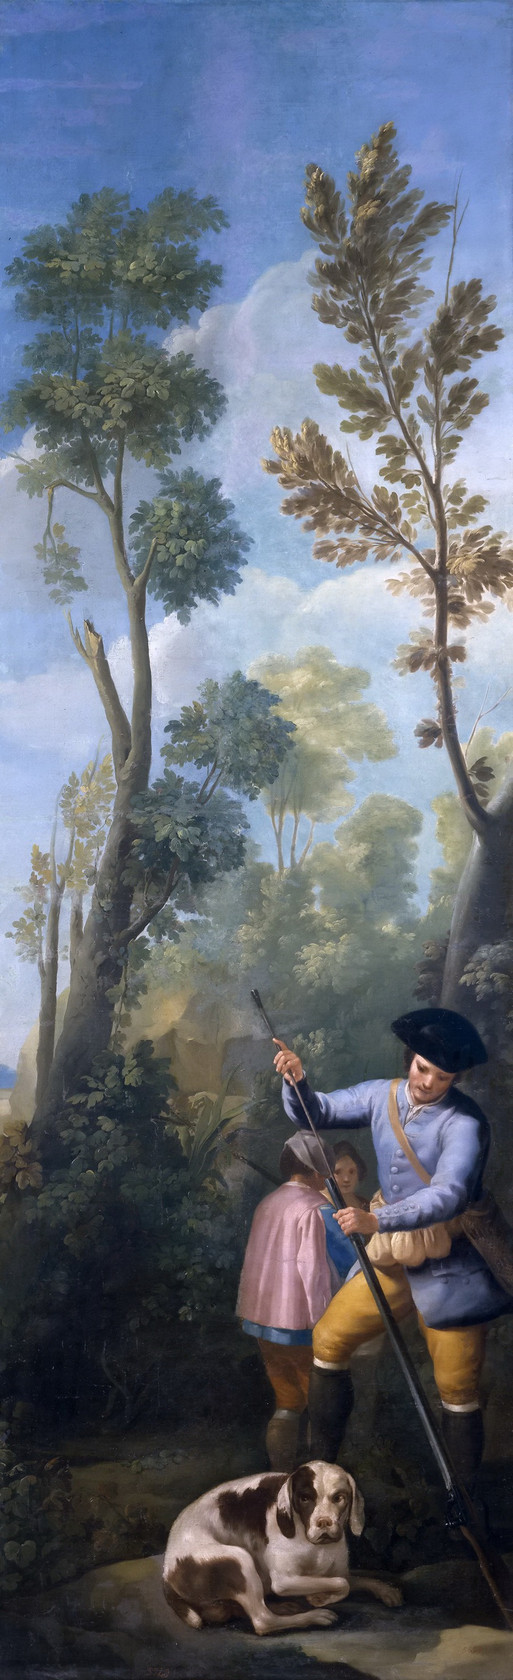 Картина - Охотник, заряжающий ружье, 1775